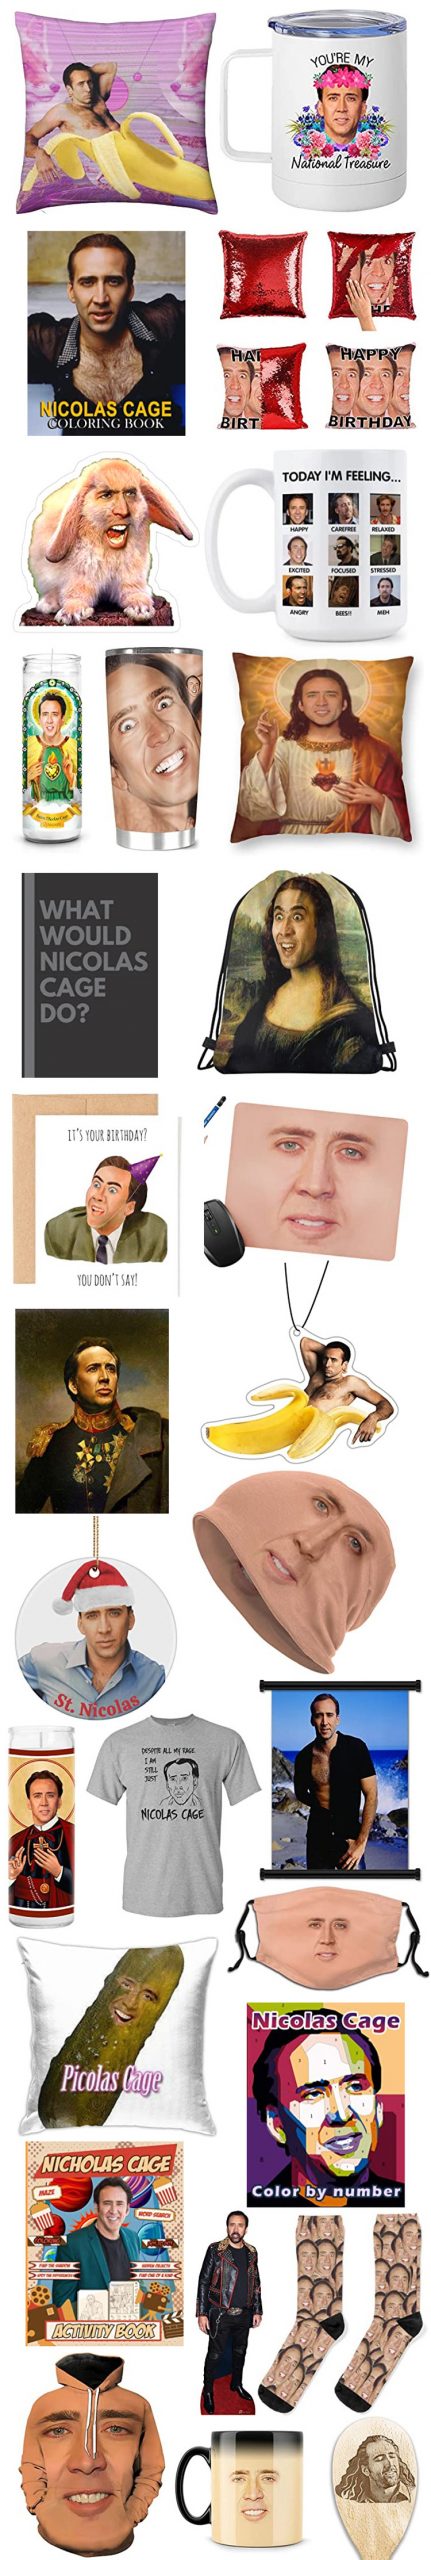 Nicolas Cage Gag Gifts